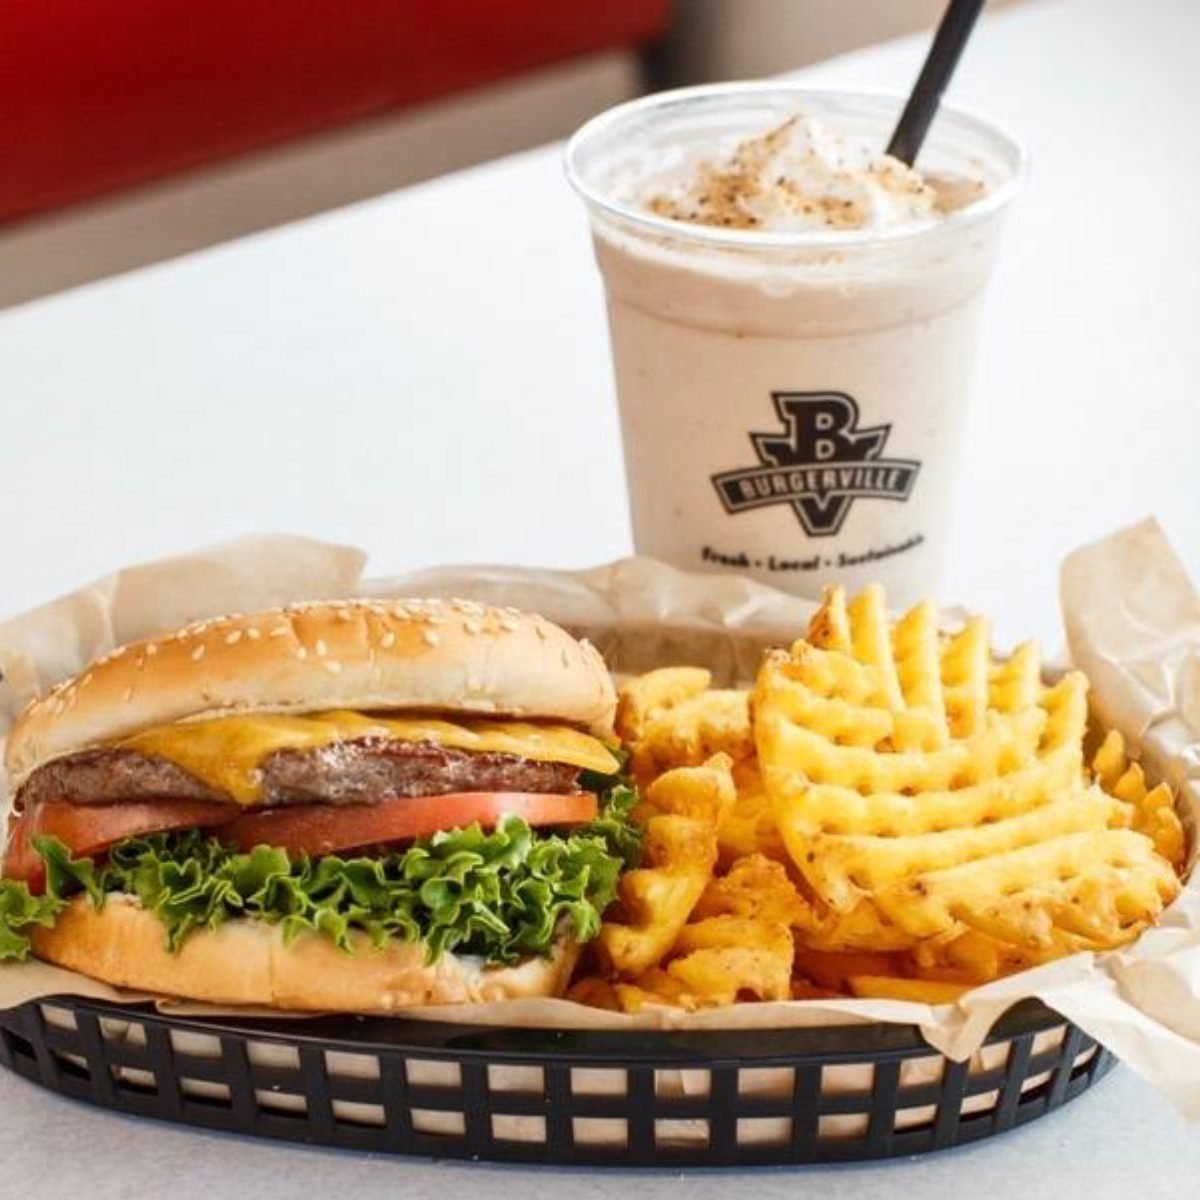 Burgerville burger, fries and shake